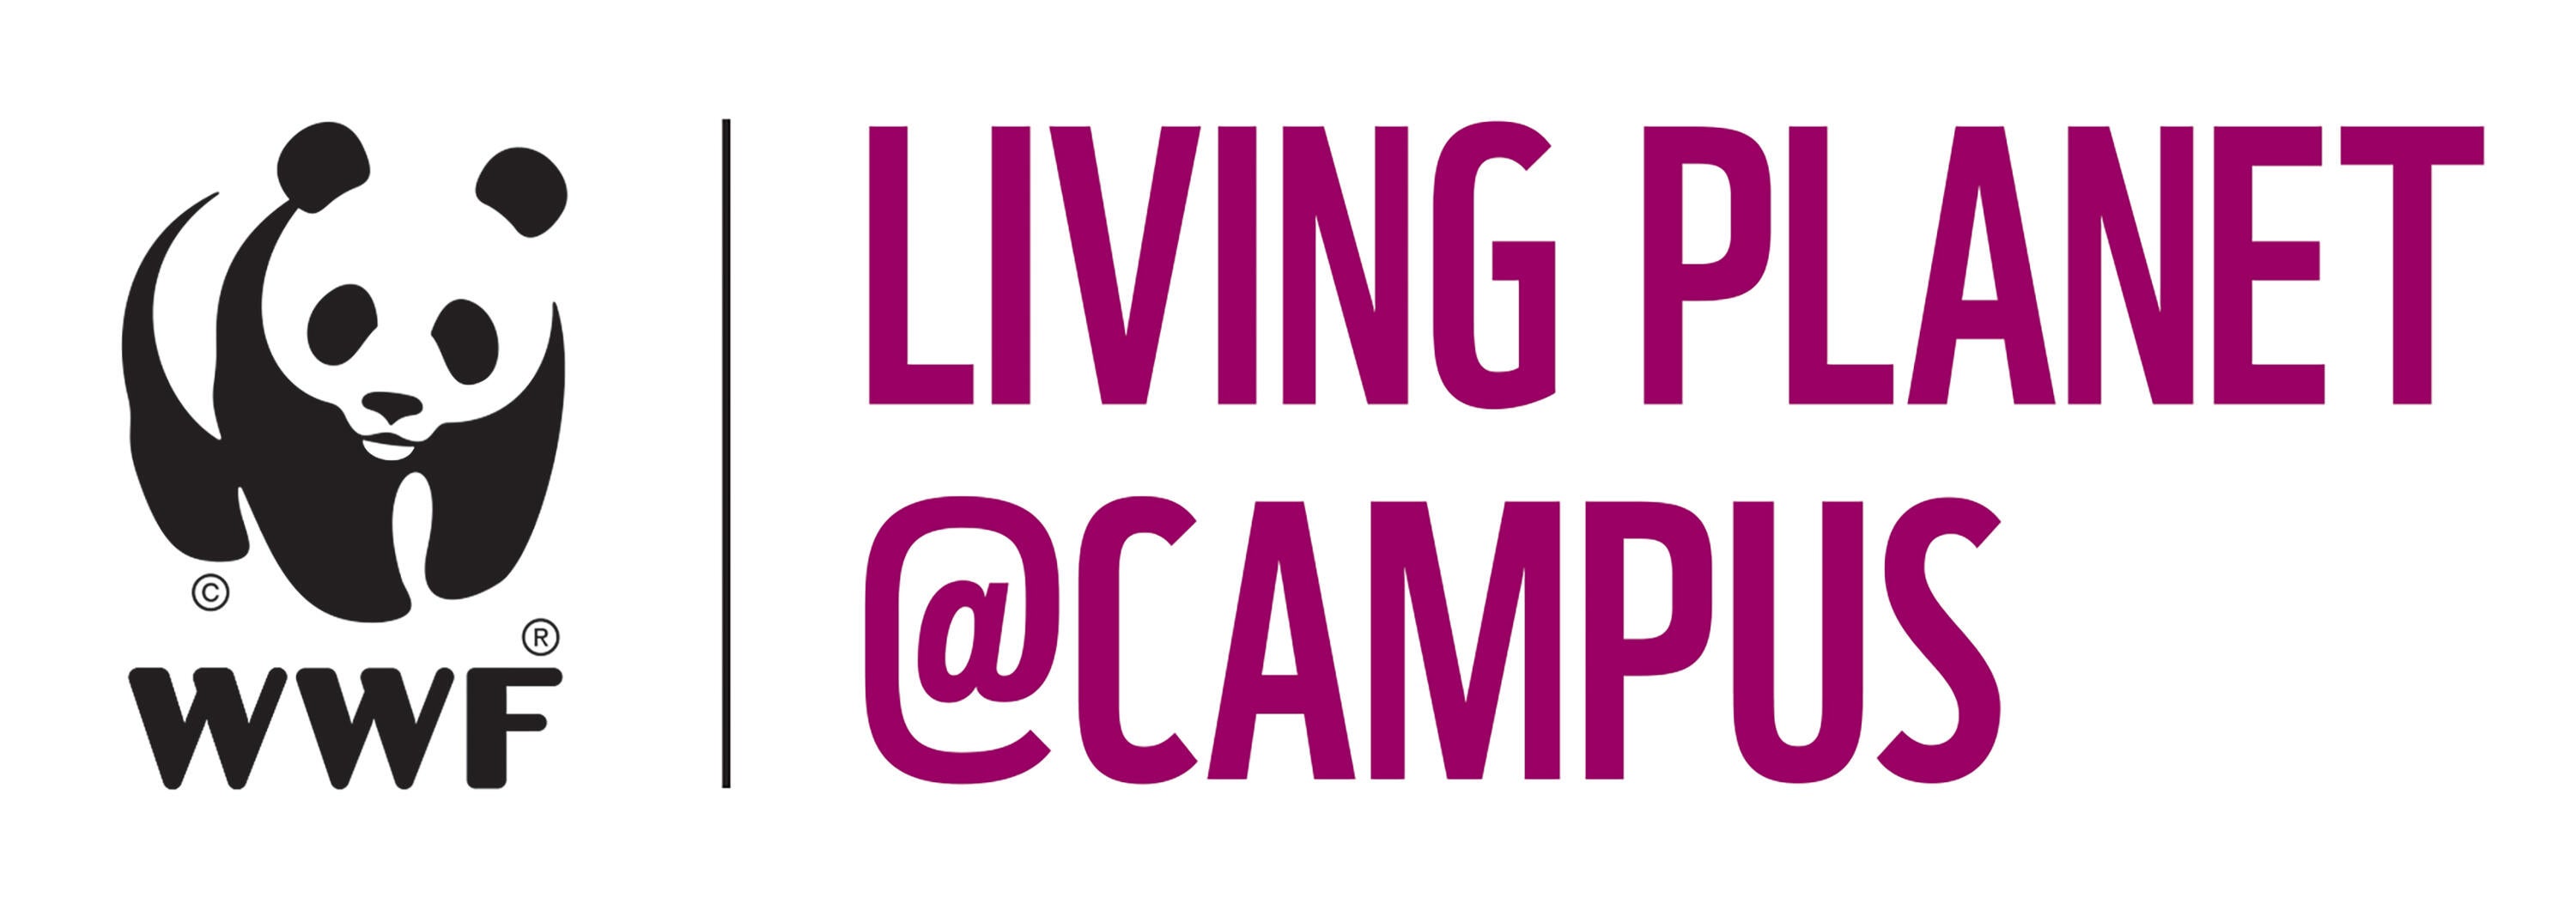 Living Planet at Campus logo